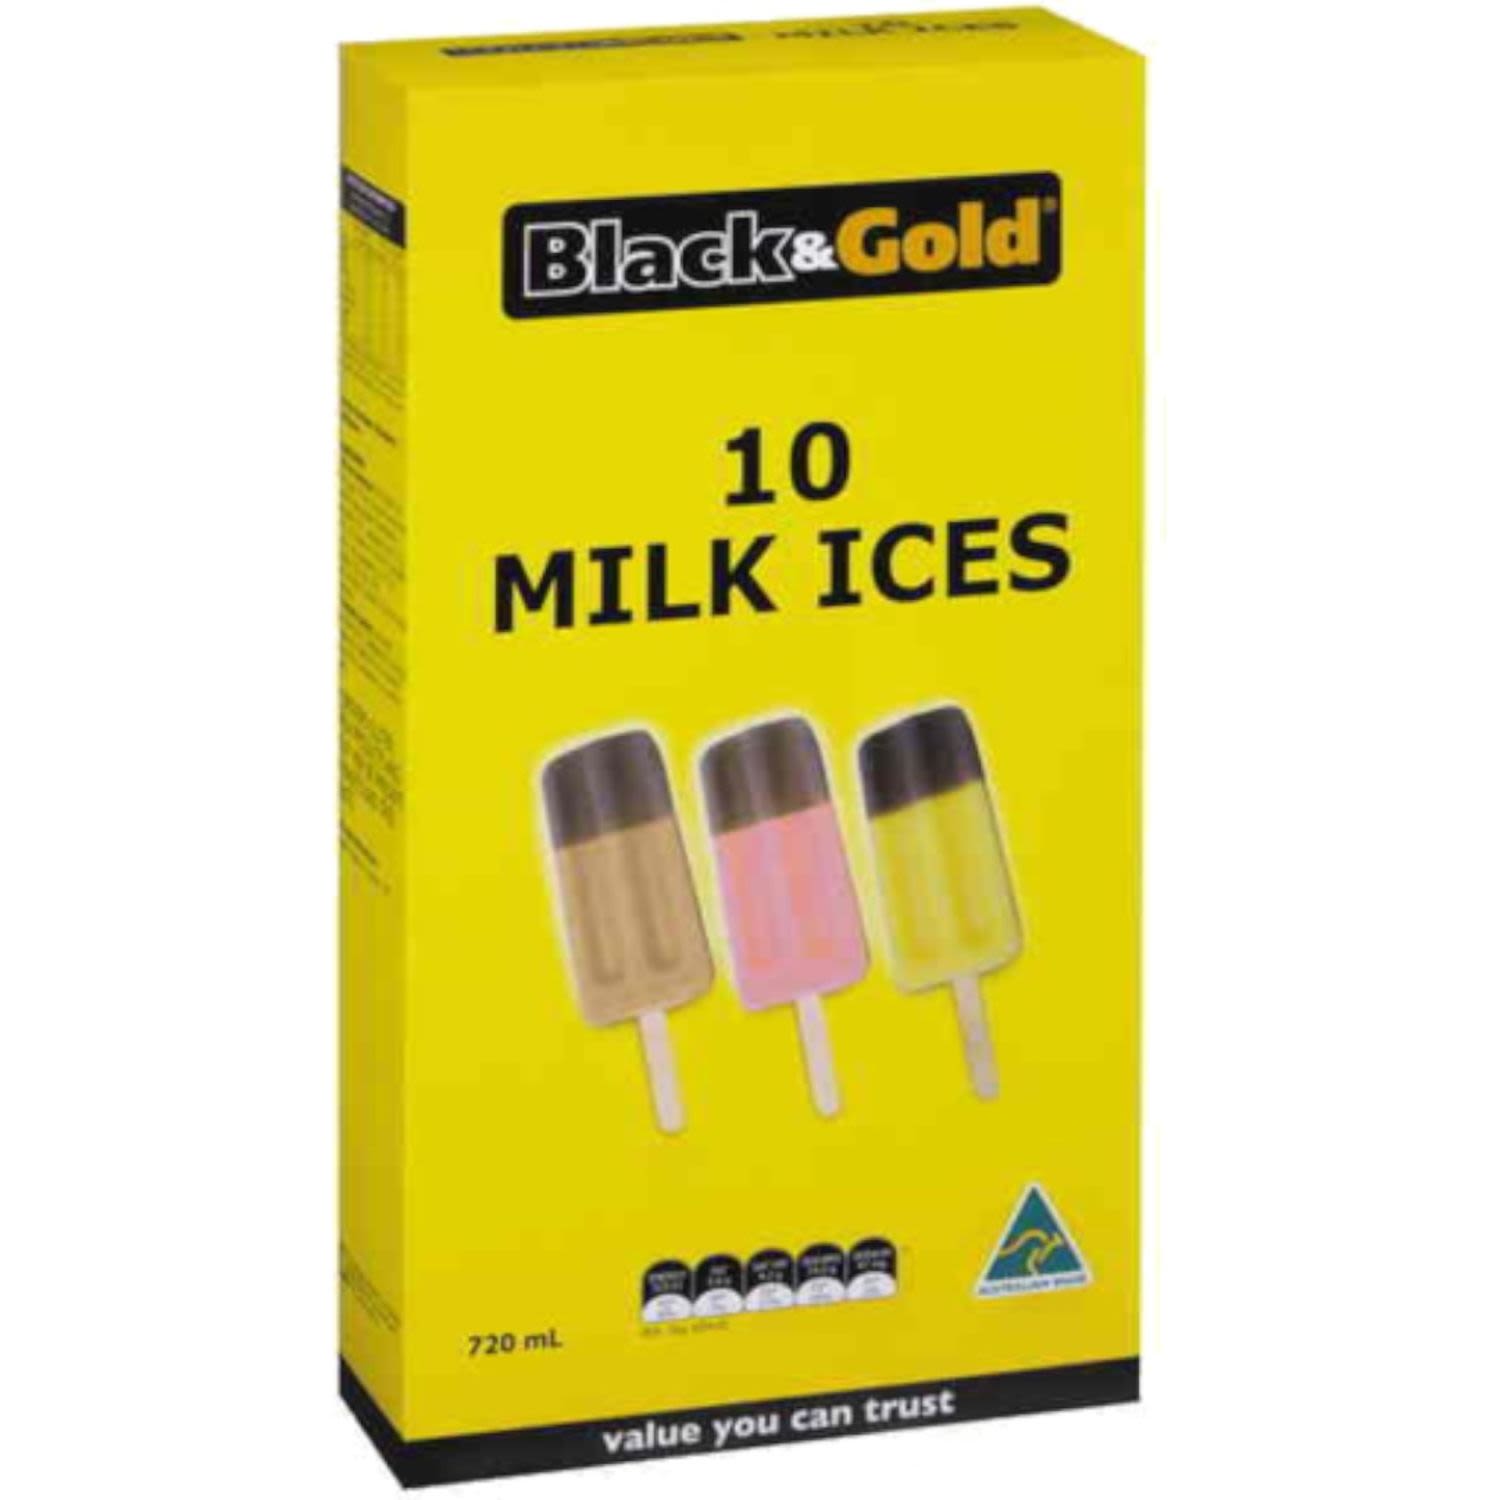 Black & Gold Milk Ices, 10 Each